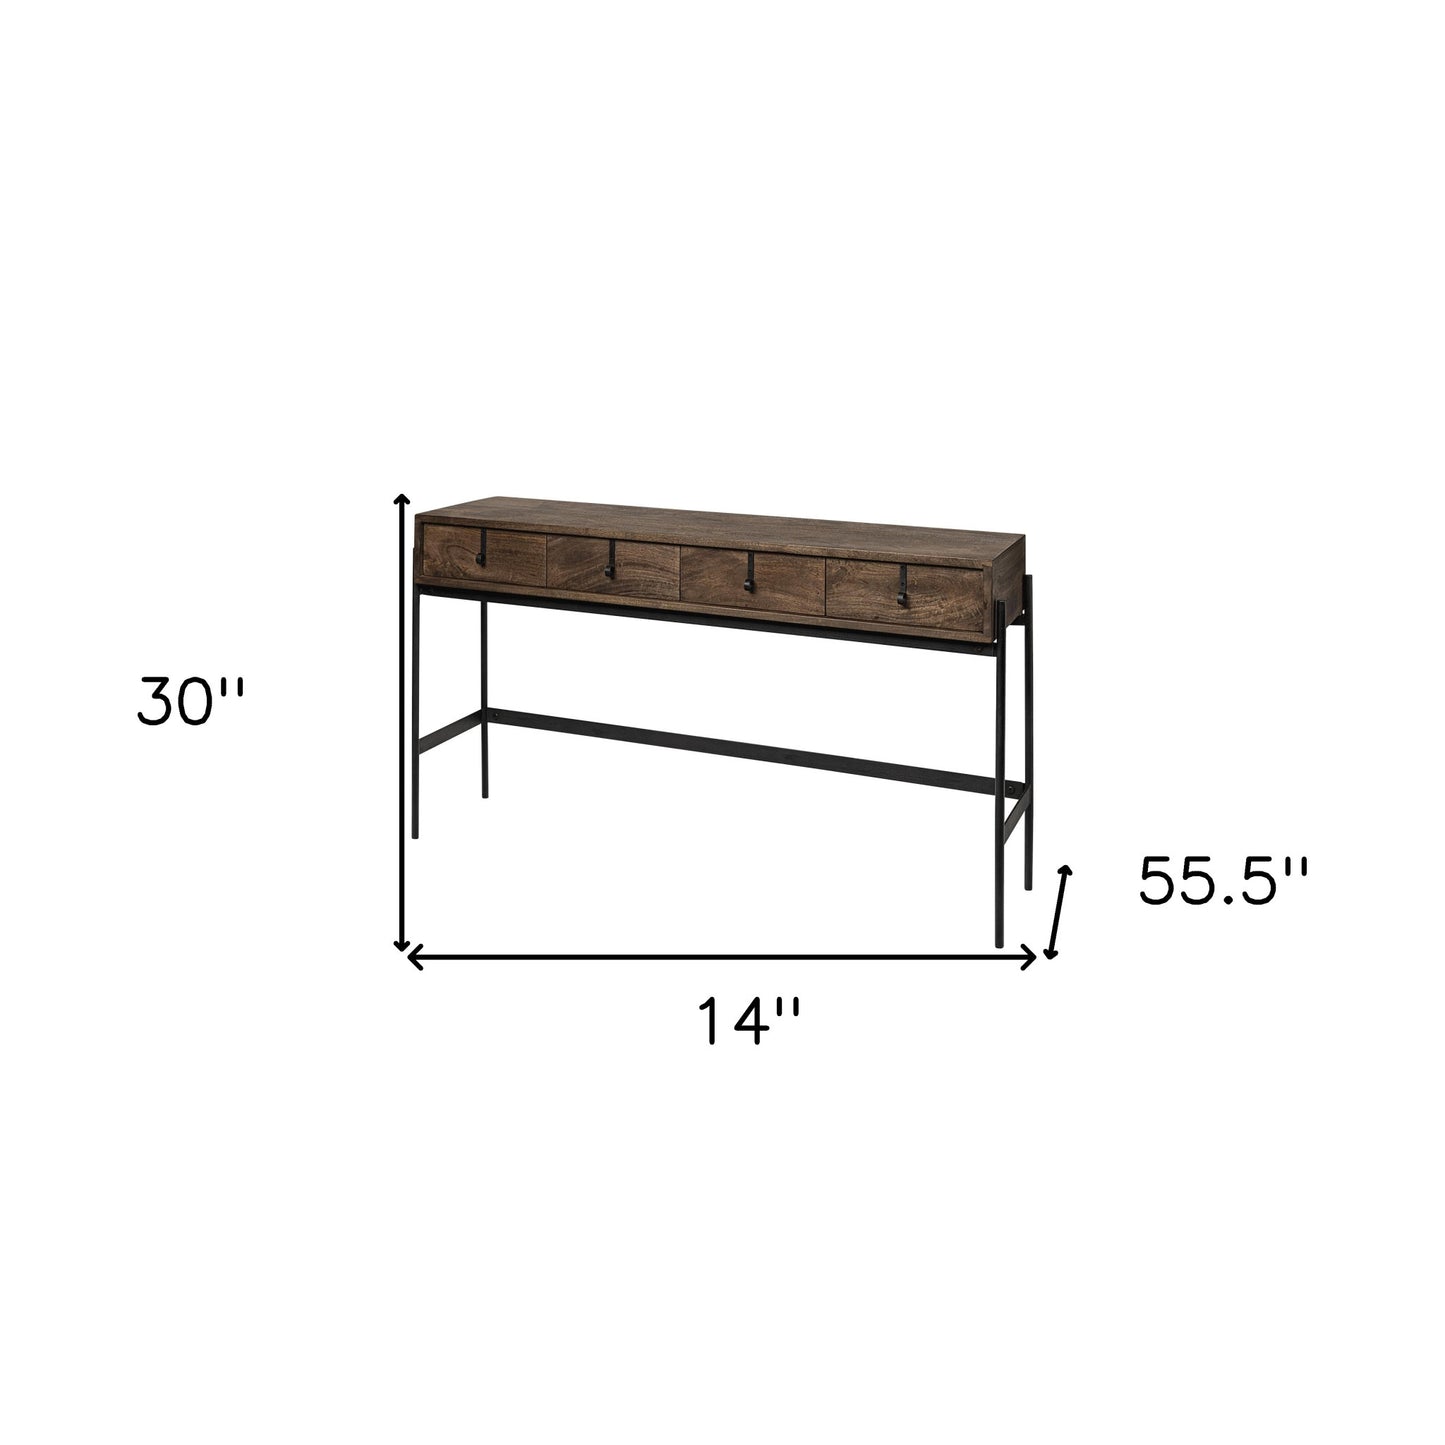 Rectangular Mango Wood Finish Console Table With 4 Drawers